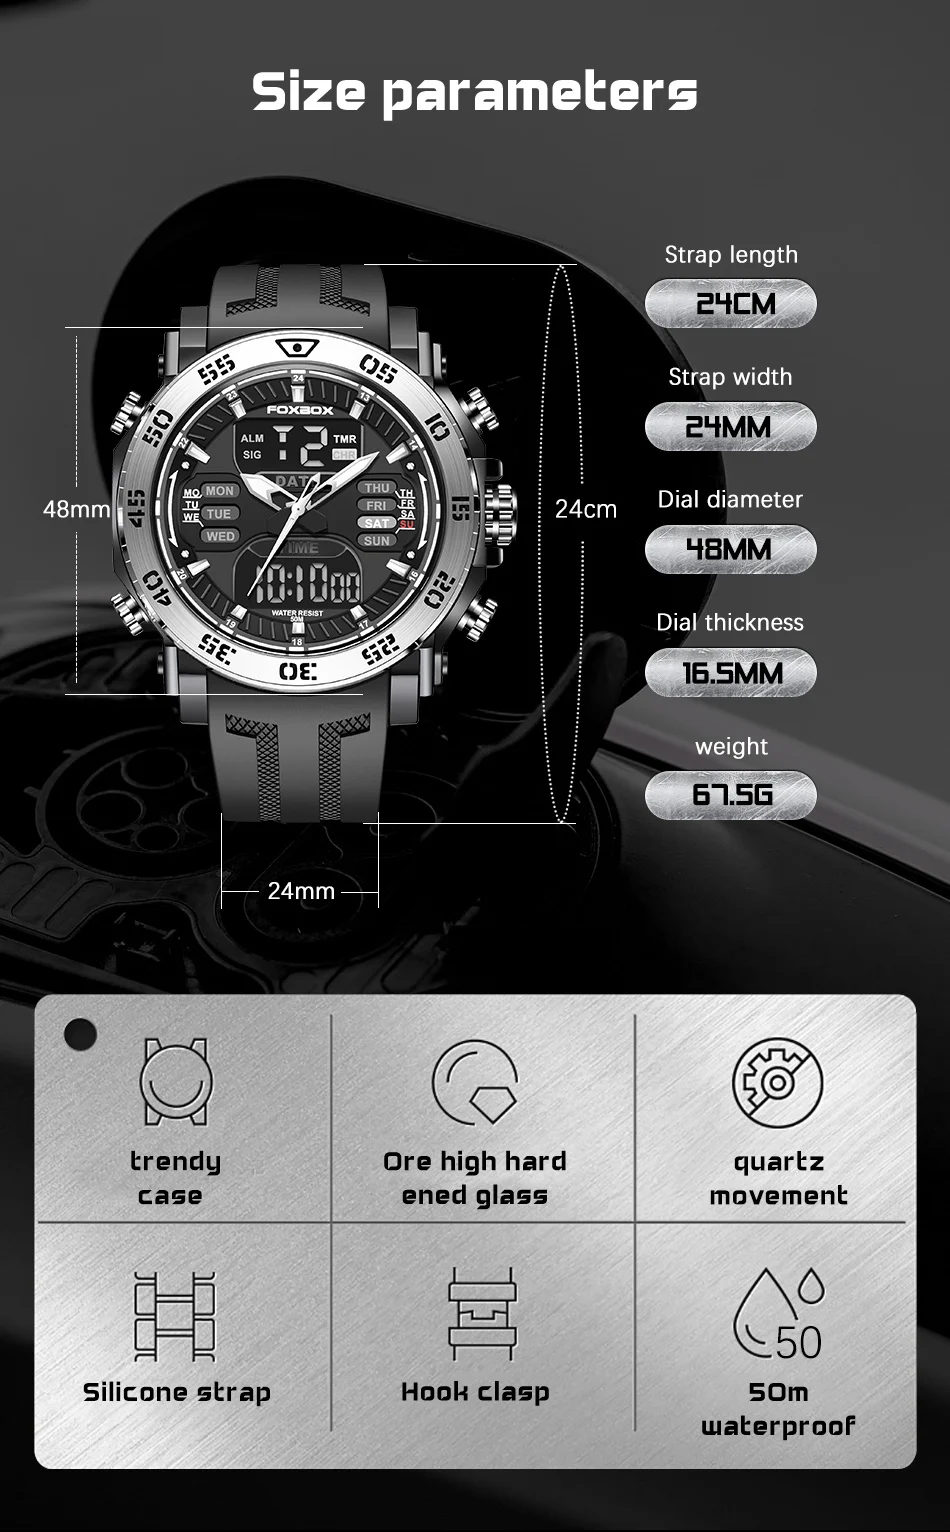 FOXBOX Military Watch Waterproof Wristwatch Alarm Watches Mens Sport Dual Display Watch Digital Watch for Men Relogio Masculino